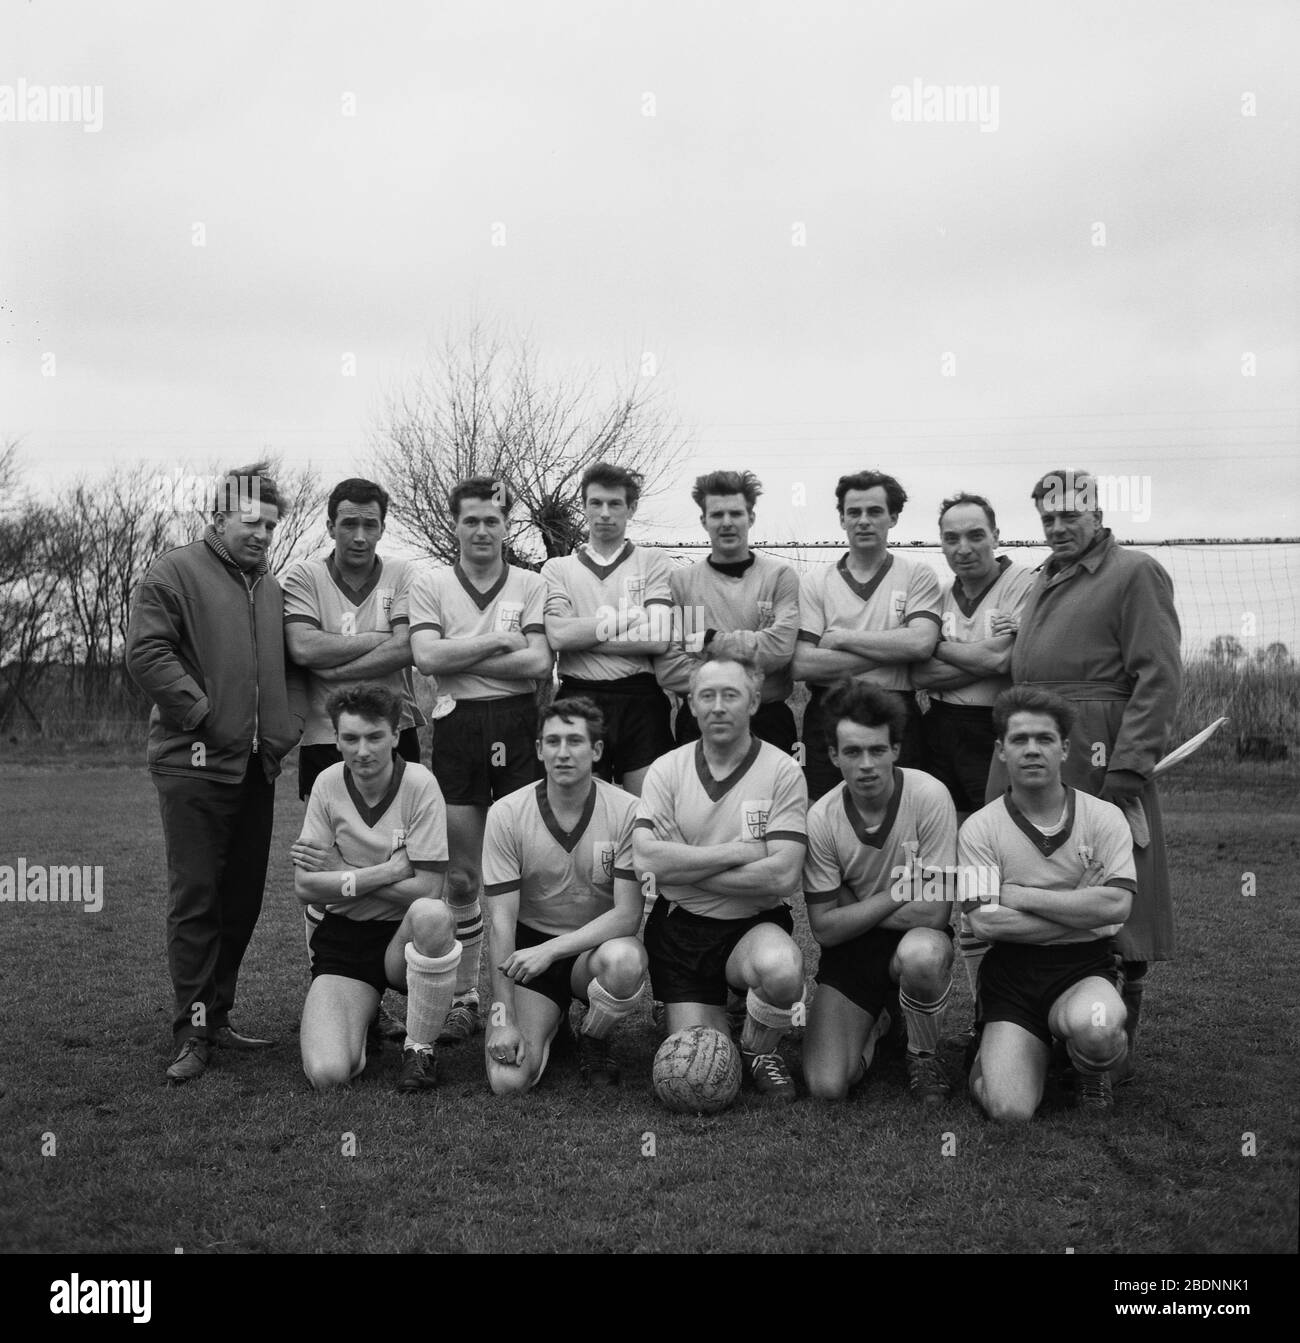 1965 Historical Amateur Football Team Photo Showing The Football Kit 